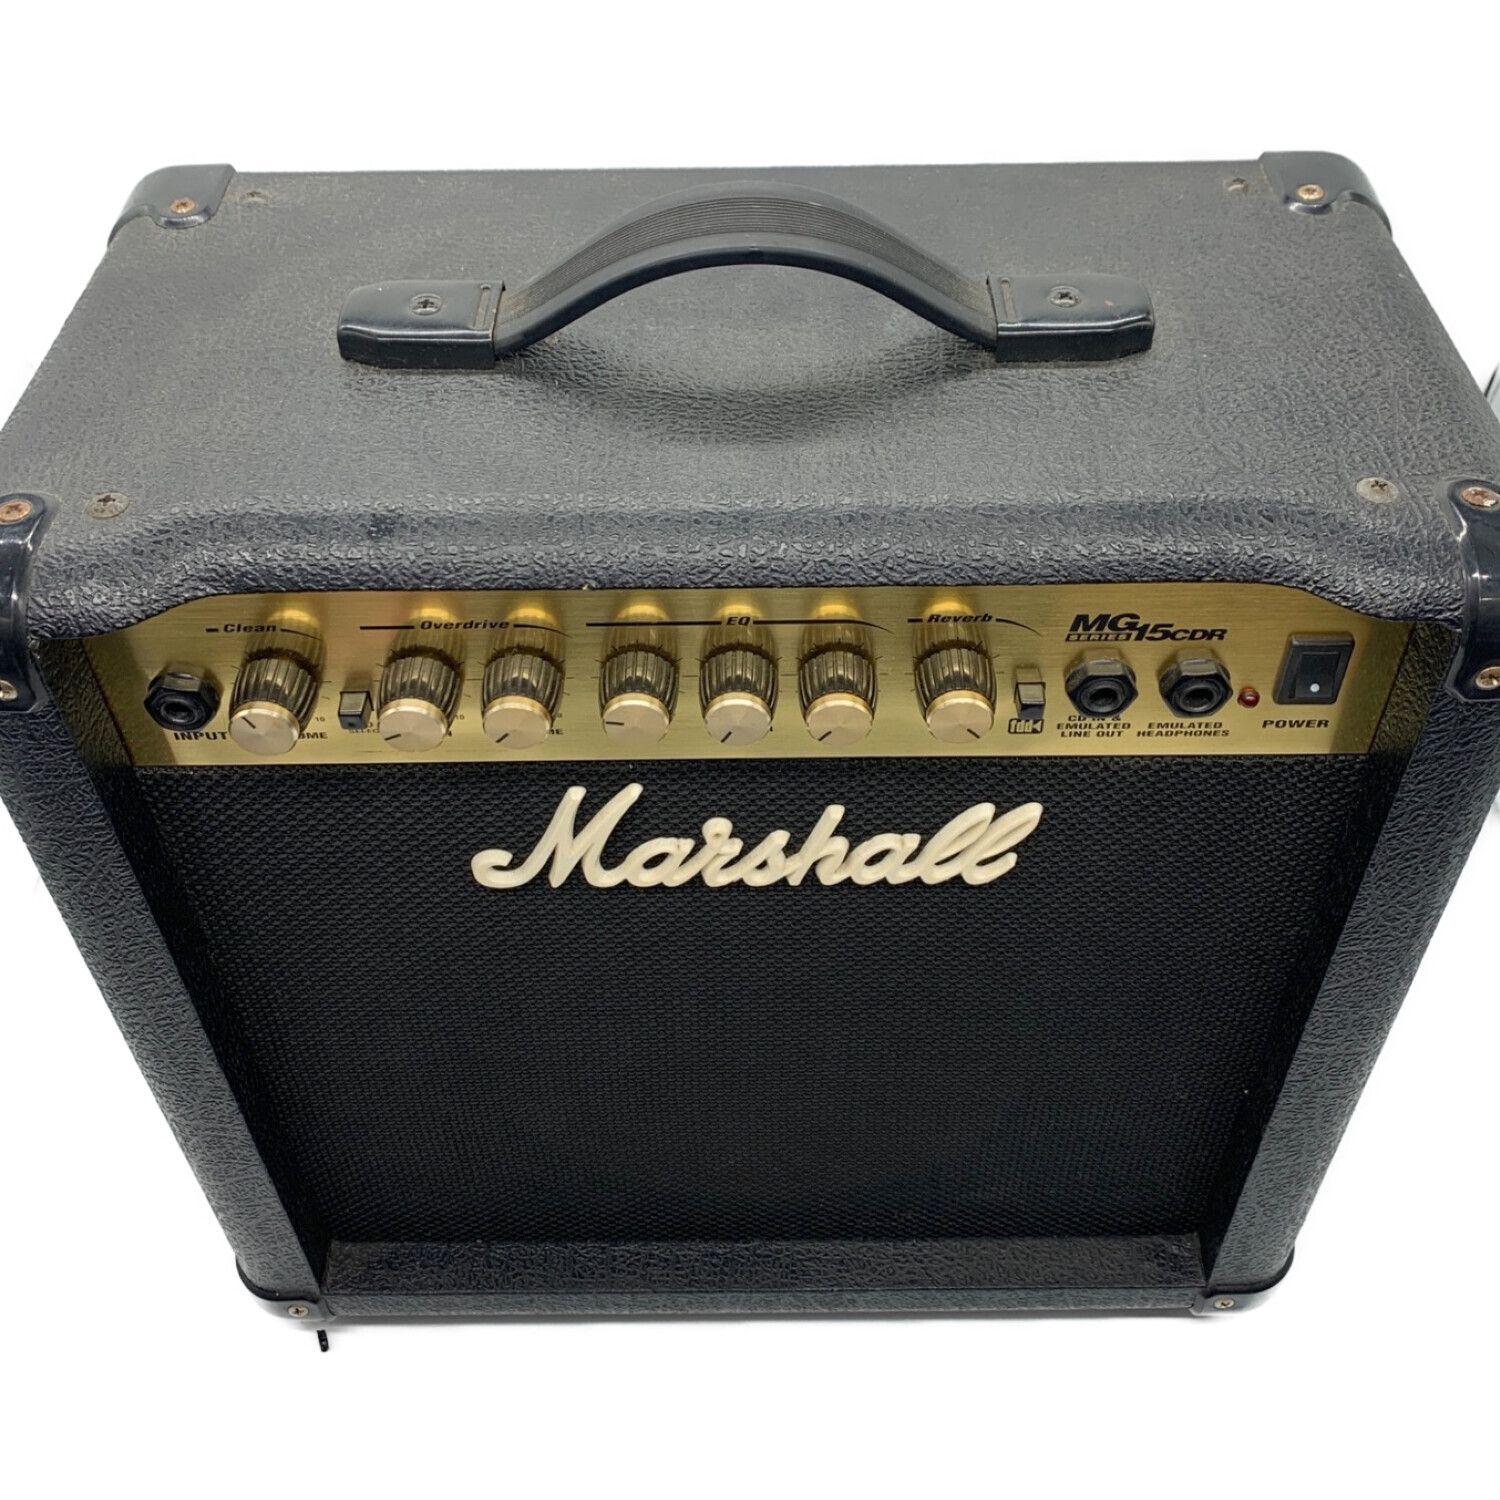 Marshall (マーシャル) ギターアンプ MG15CDR 動作確認済み